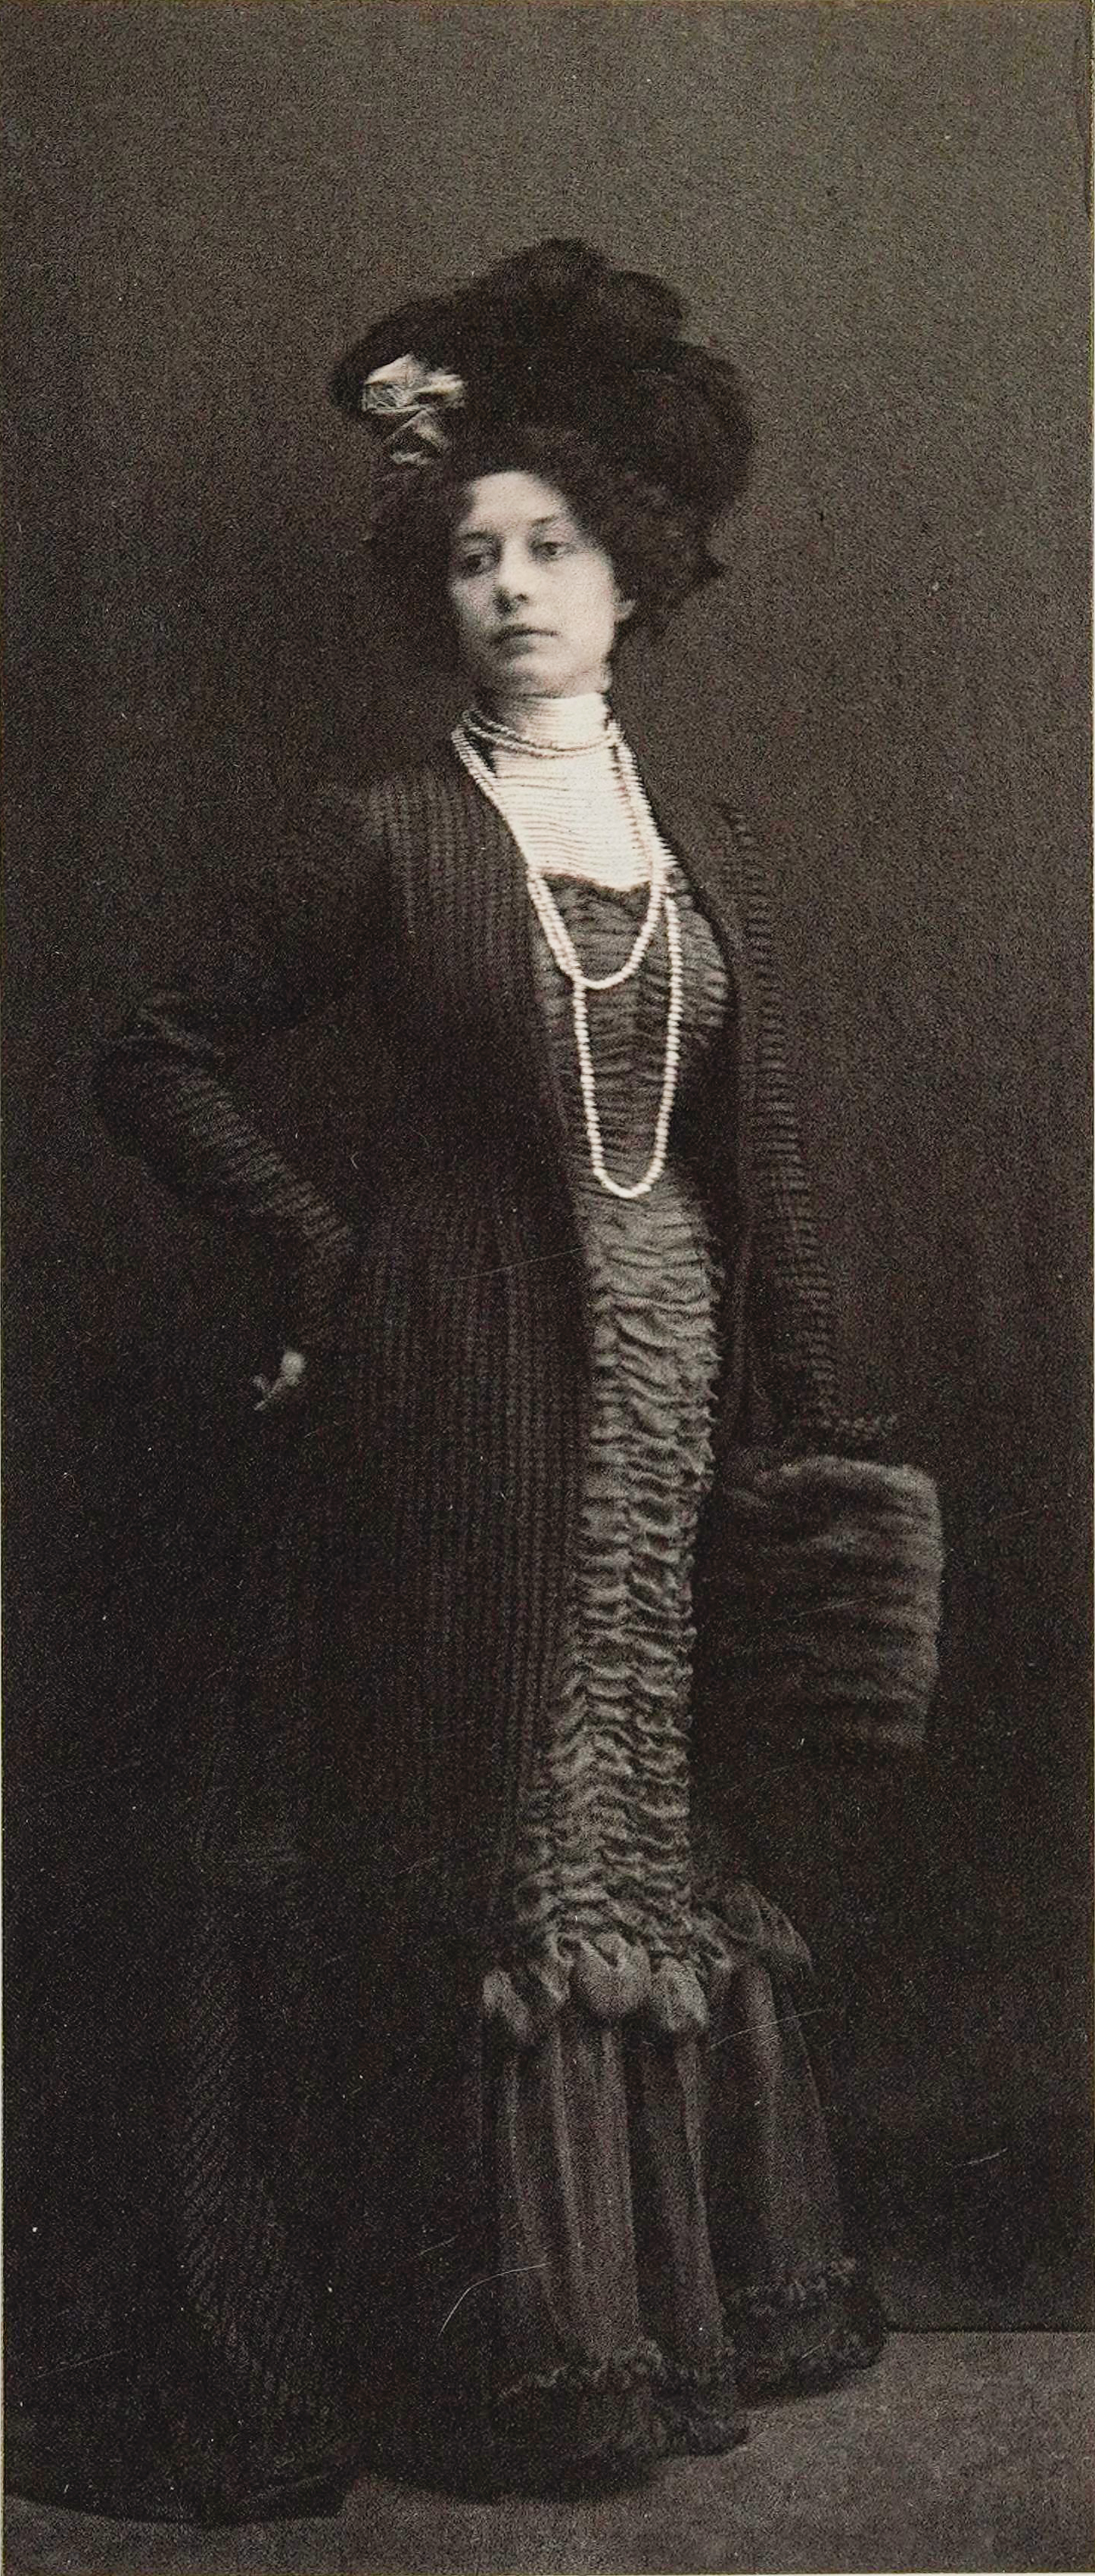 Portrait of Miss Ben-Yusuf. Zaida Ben-Yusuf. Platinum print,1898. NMAH, Behring Center, Smithsonian Institution via IA